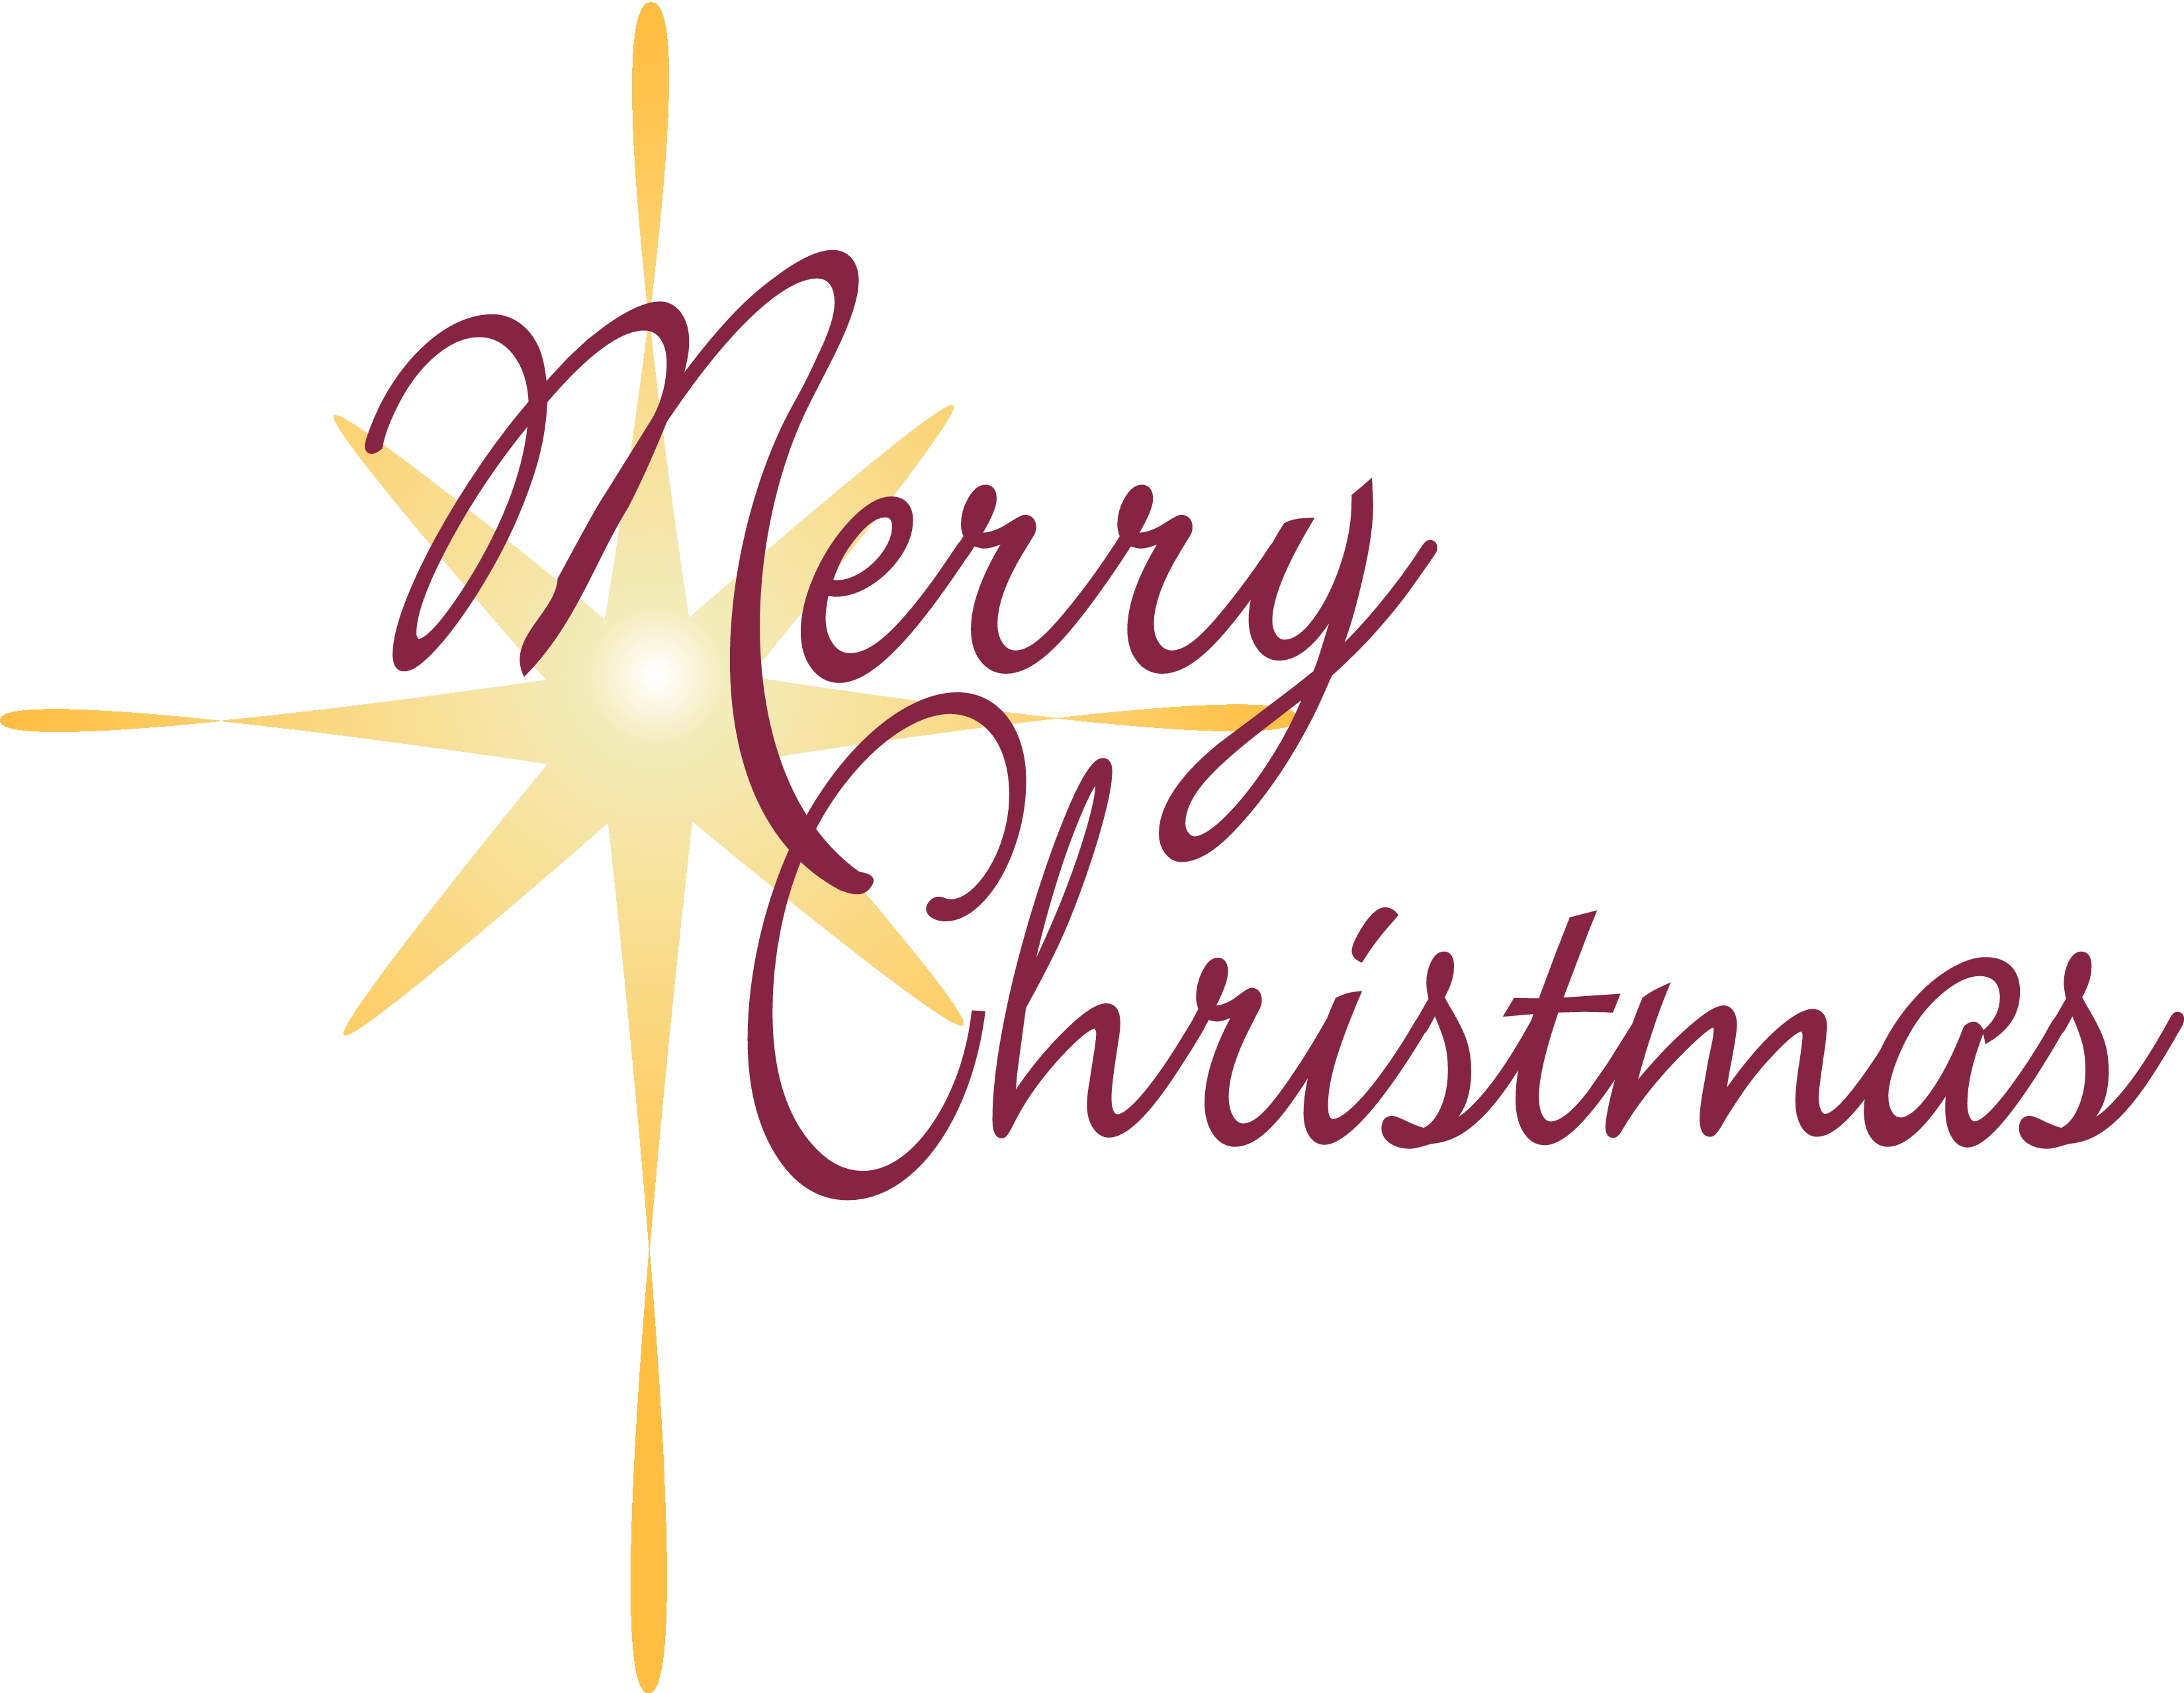 Christian Christmas Word Clip Art free image.